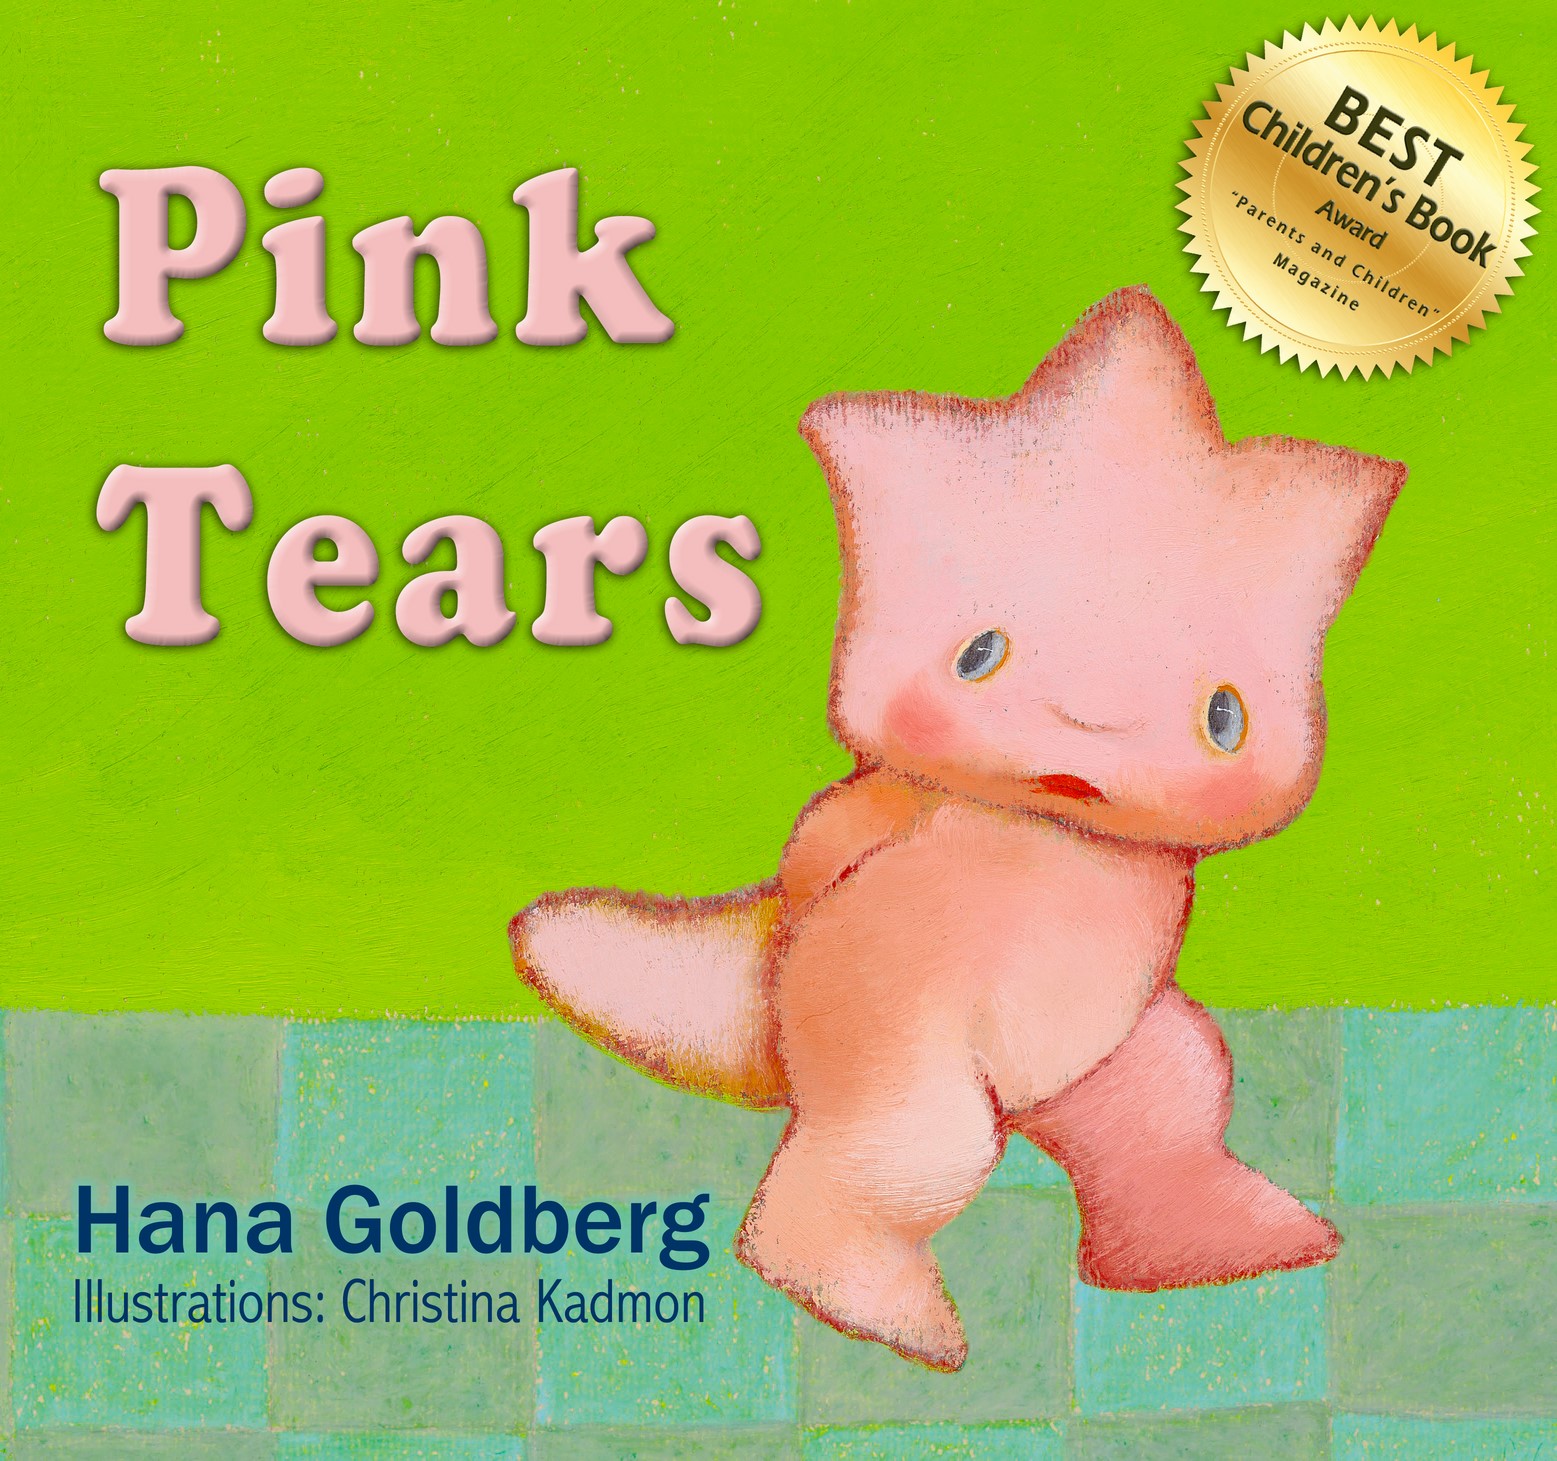 FREE: Pink Tears: Best Children’s Book Award (Ages 3-9) by Hana Goldberg